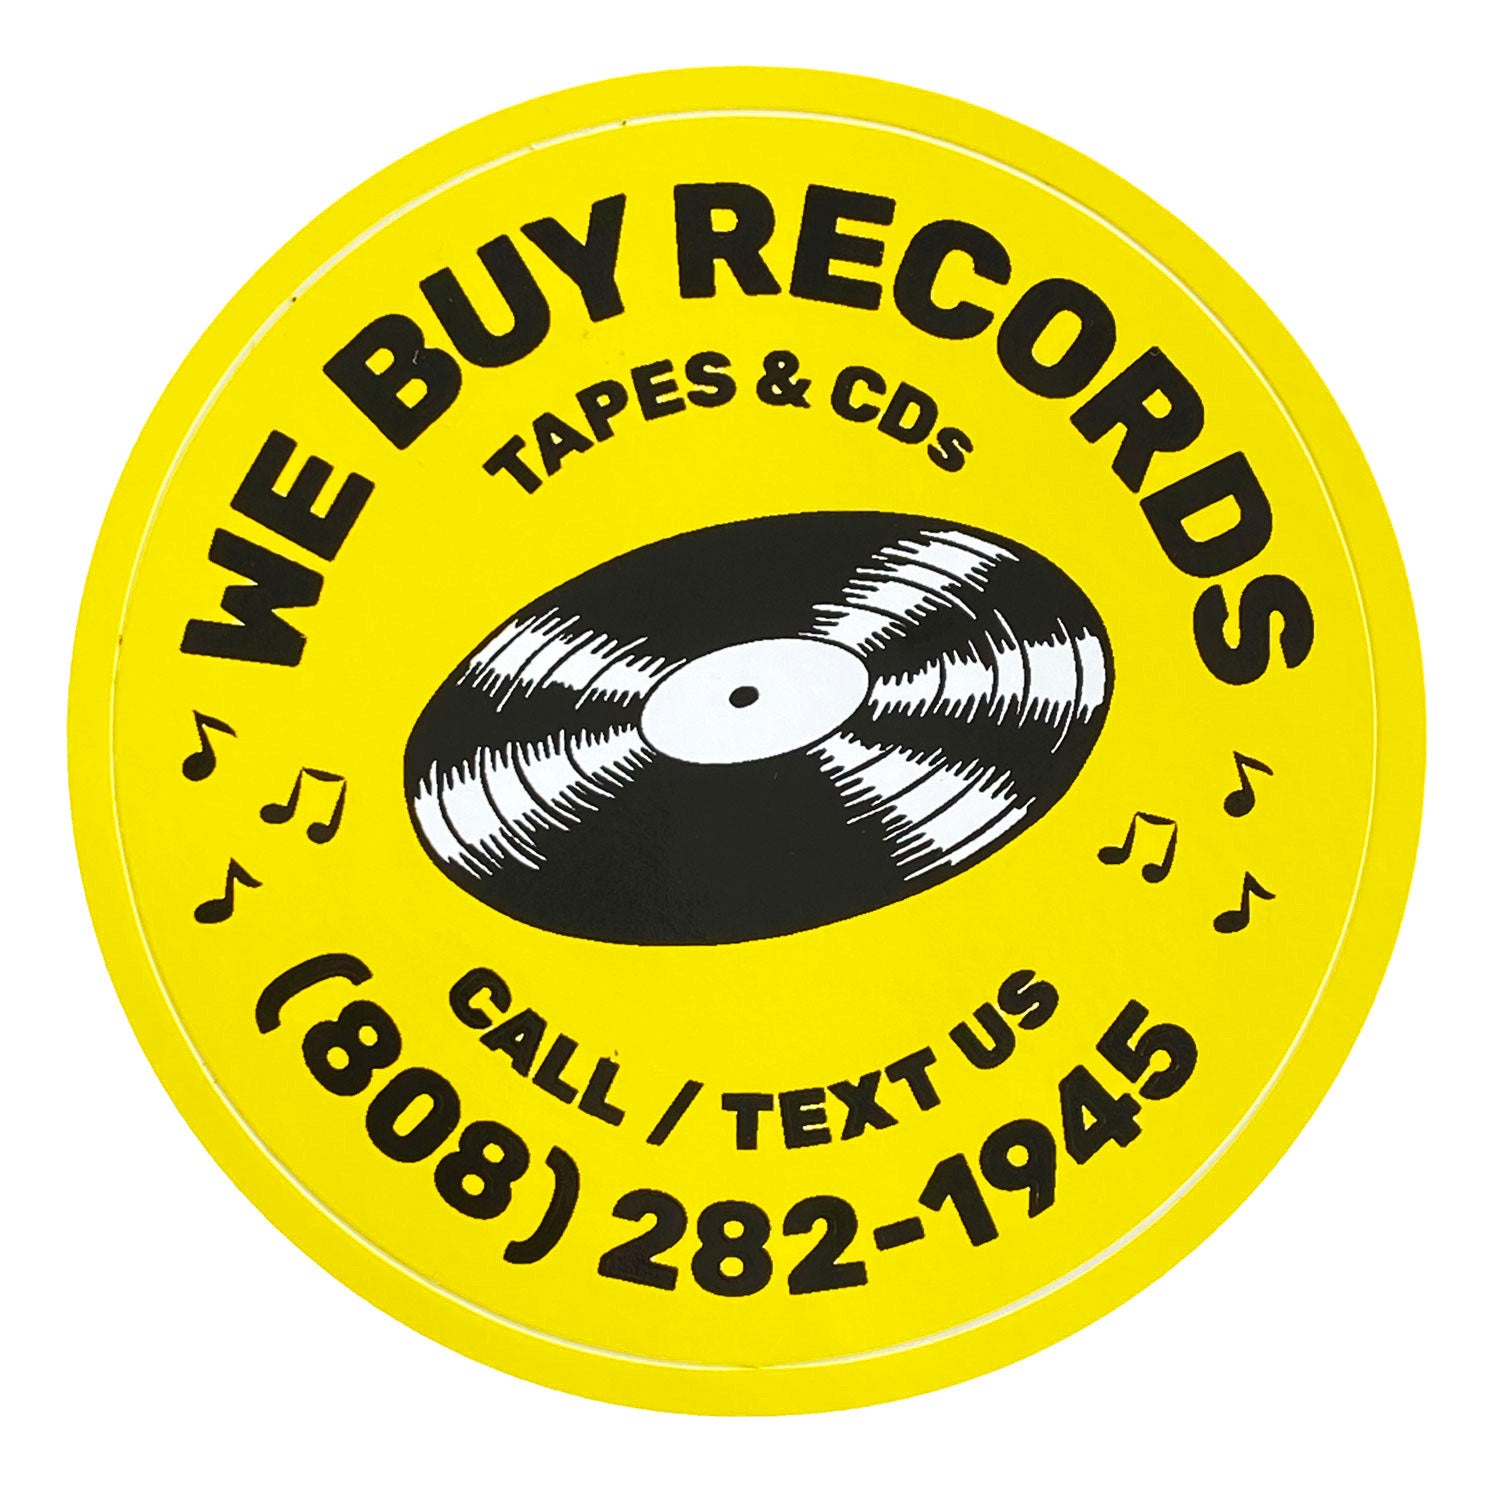 We Buy Records sticker